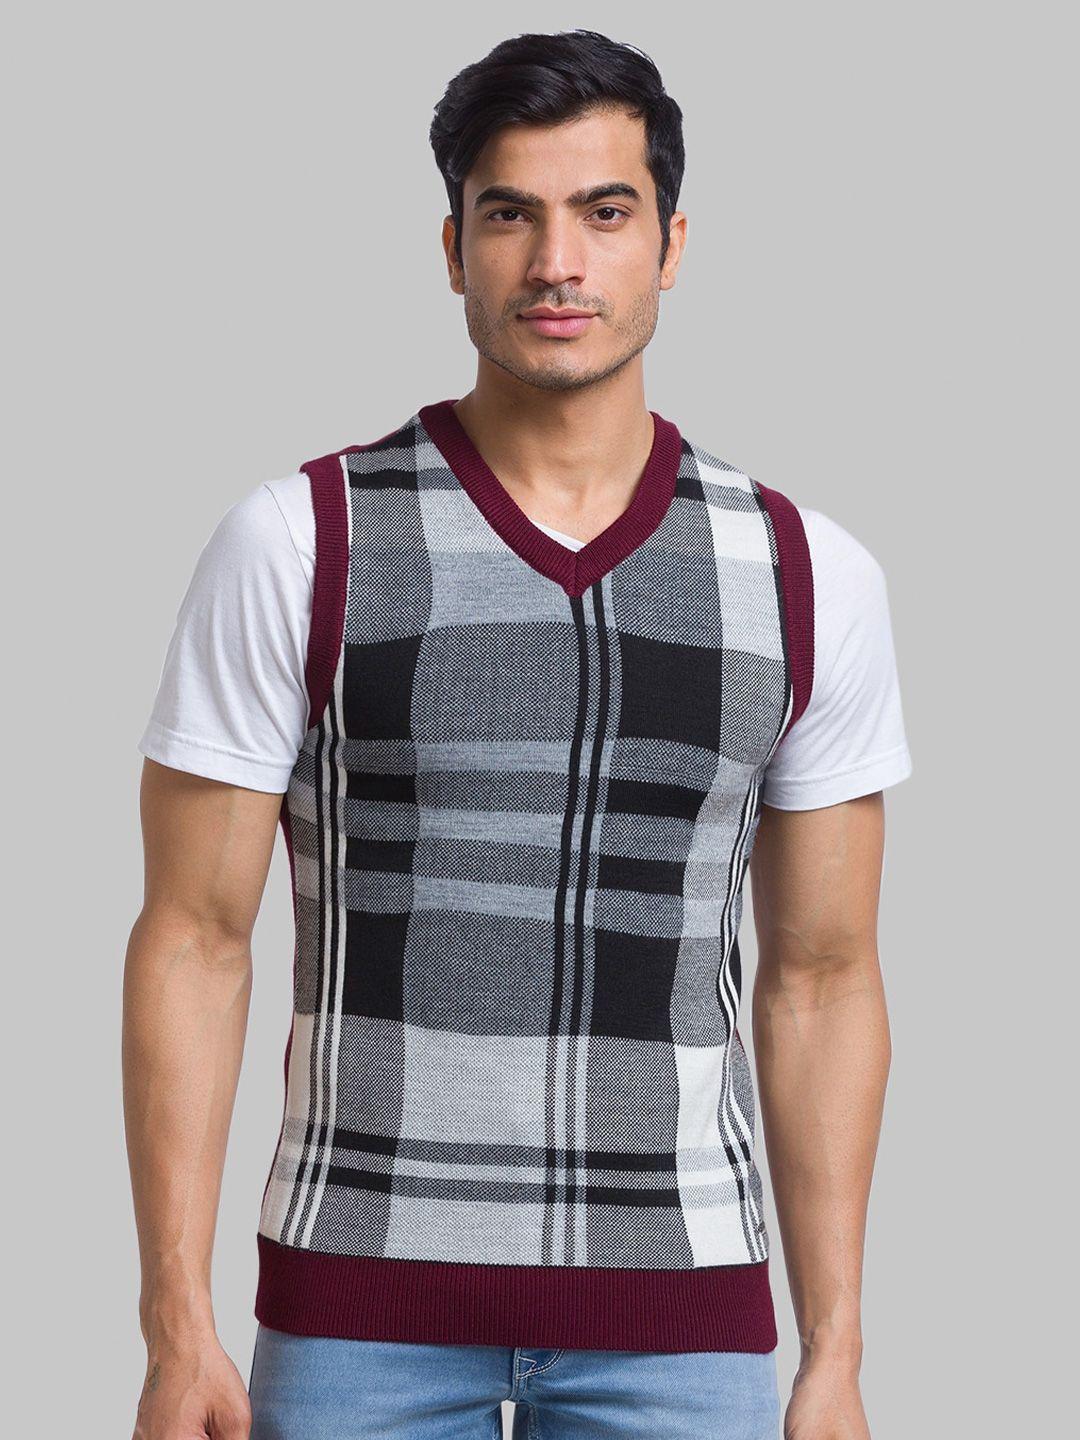 parx-men-v-neck-checked-sweater-vest